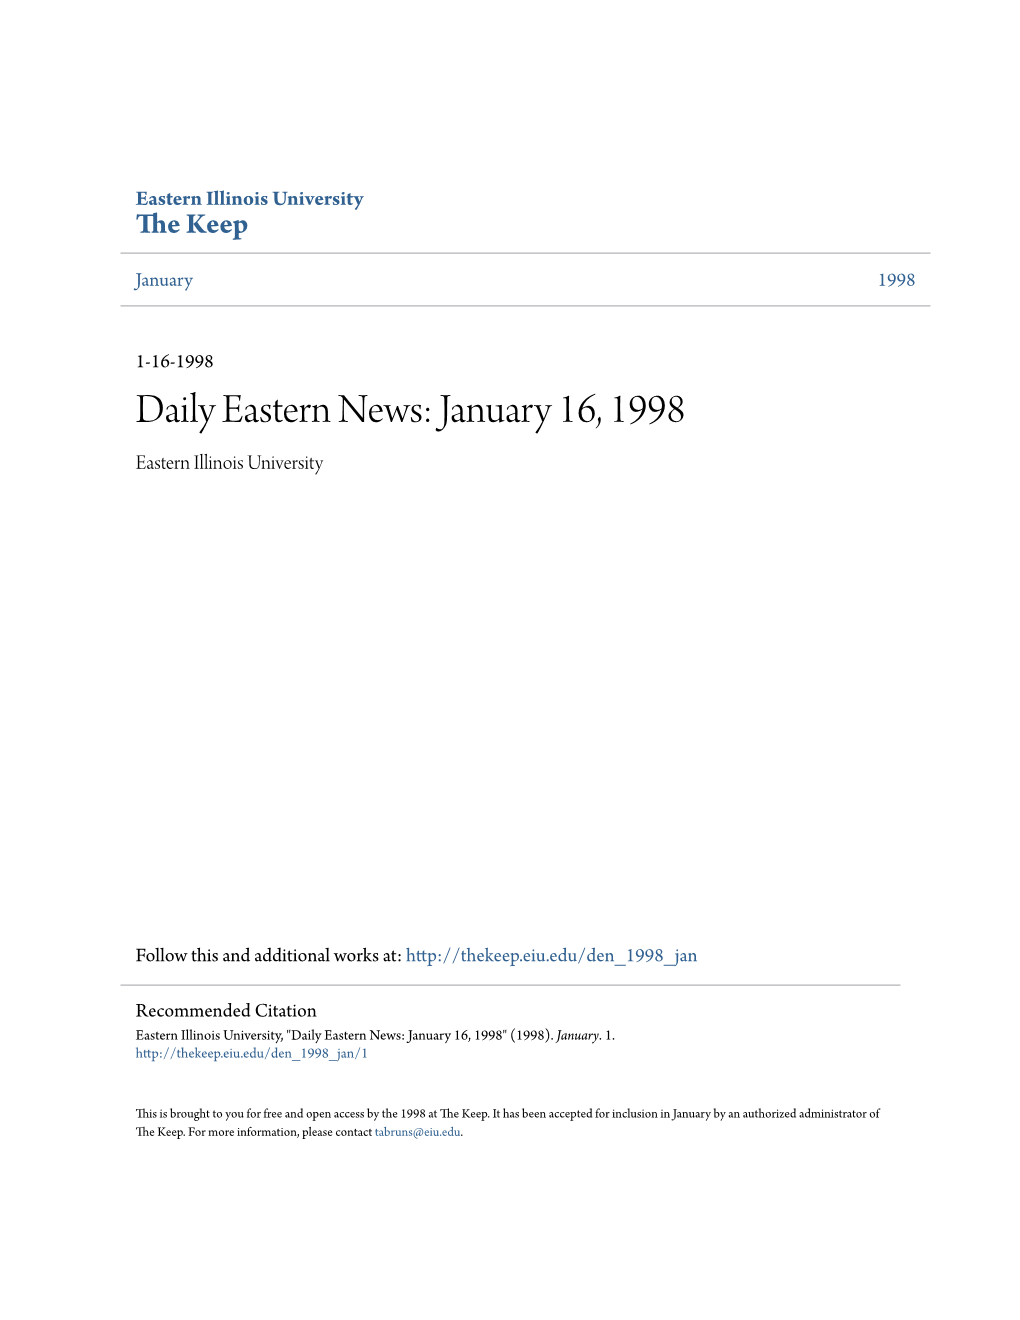 January 16, 1998 Eastern Illinois University